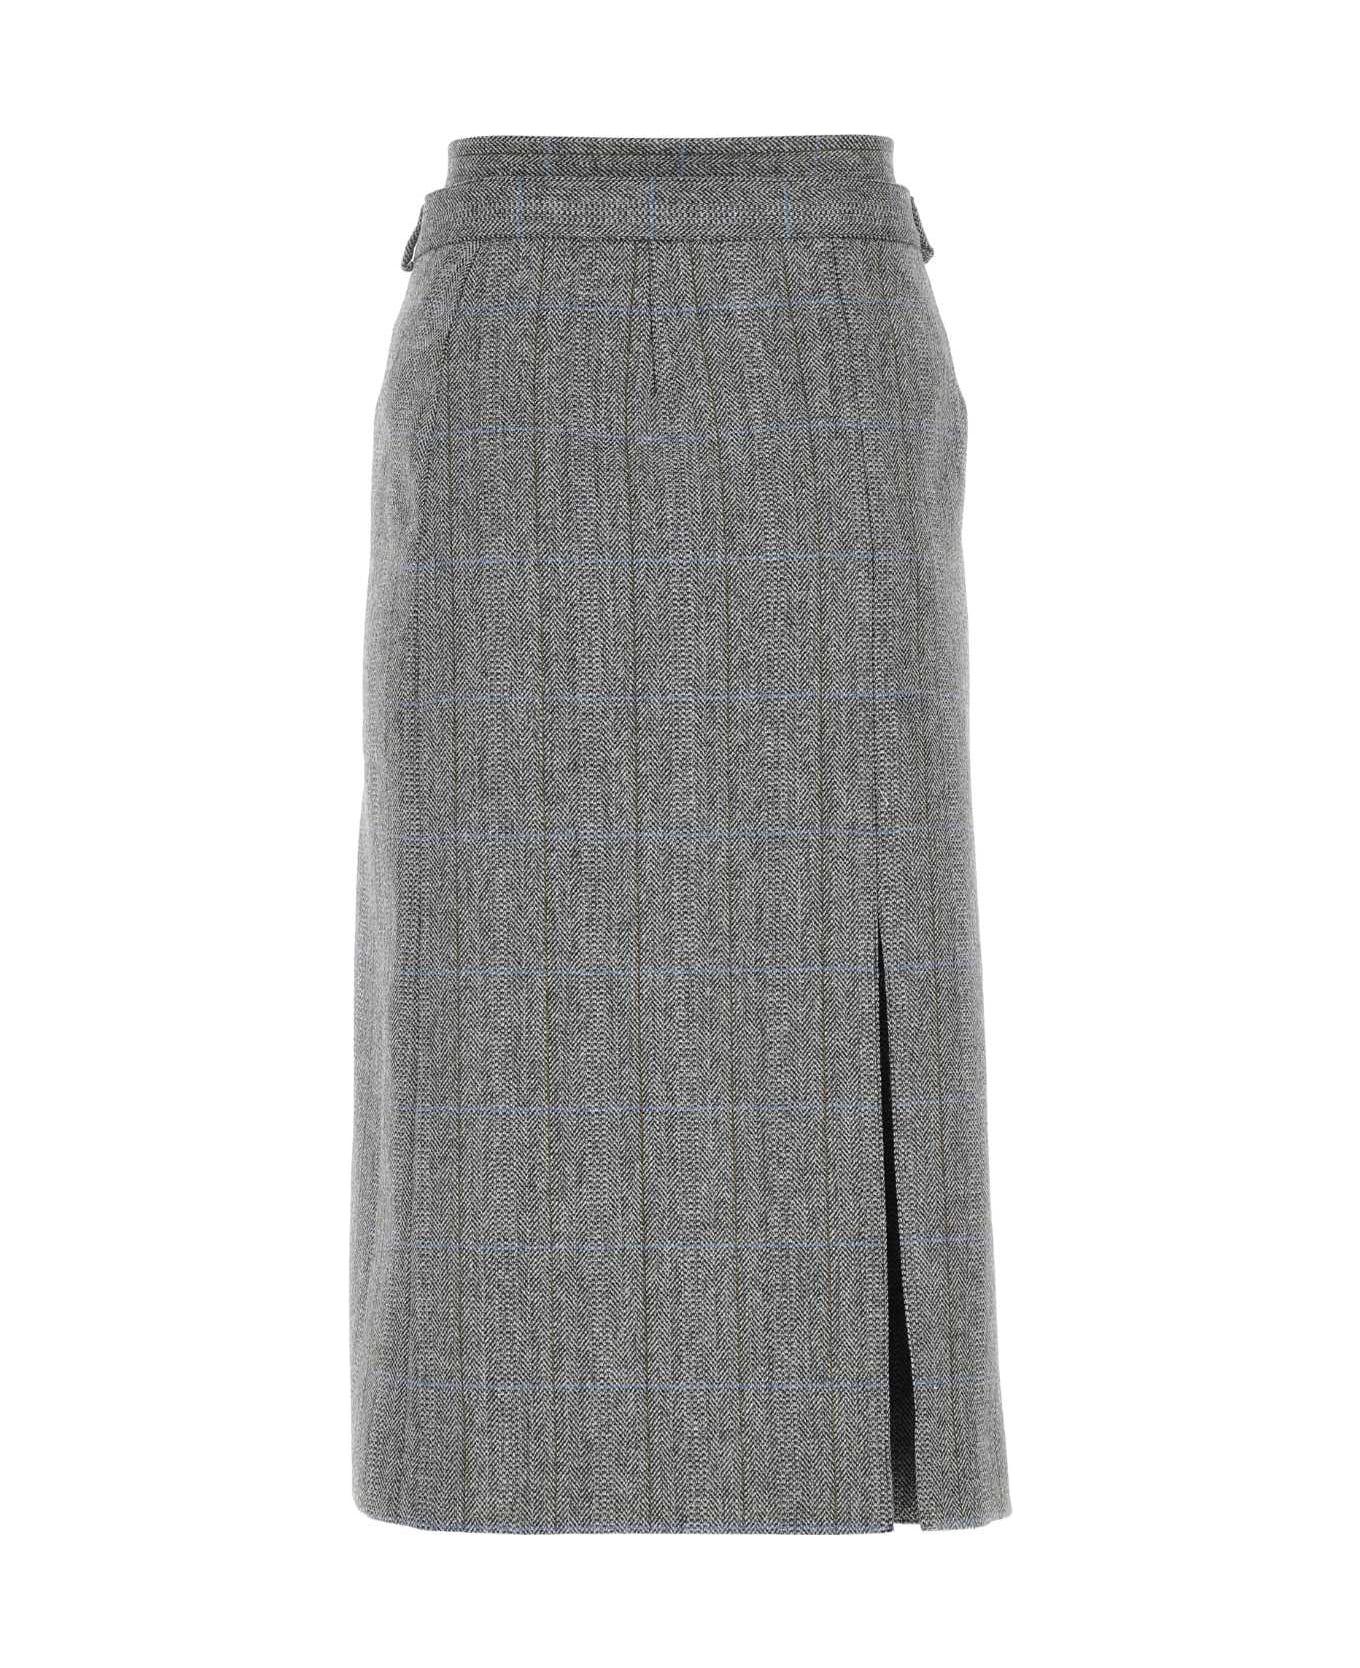 Maison Margiela Embroidered Wool Skirt - 001F